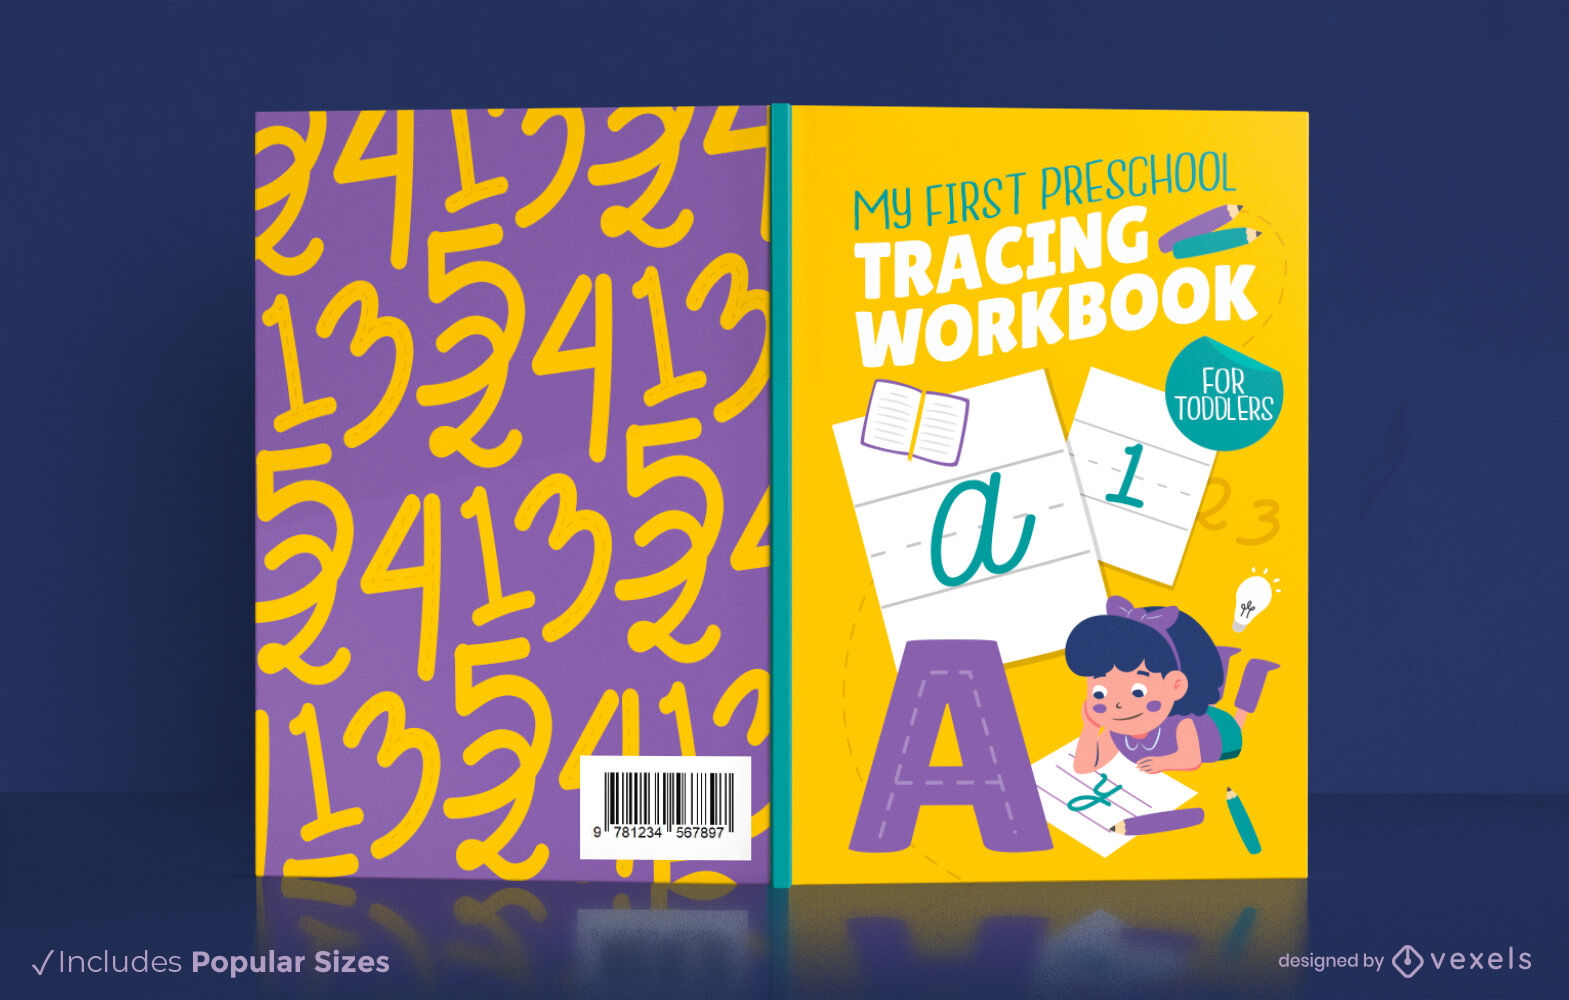 Preschool workbook book cover design